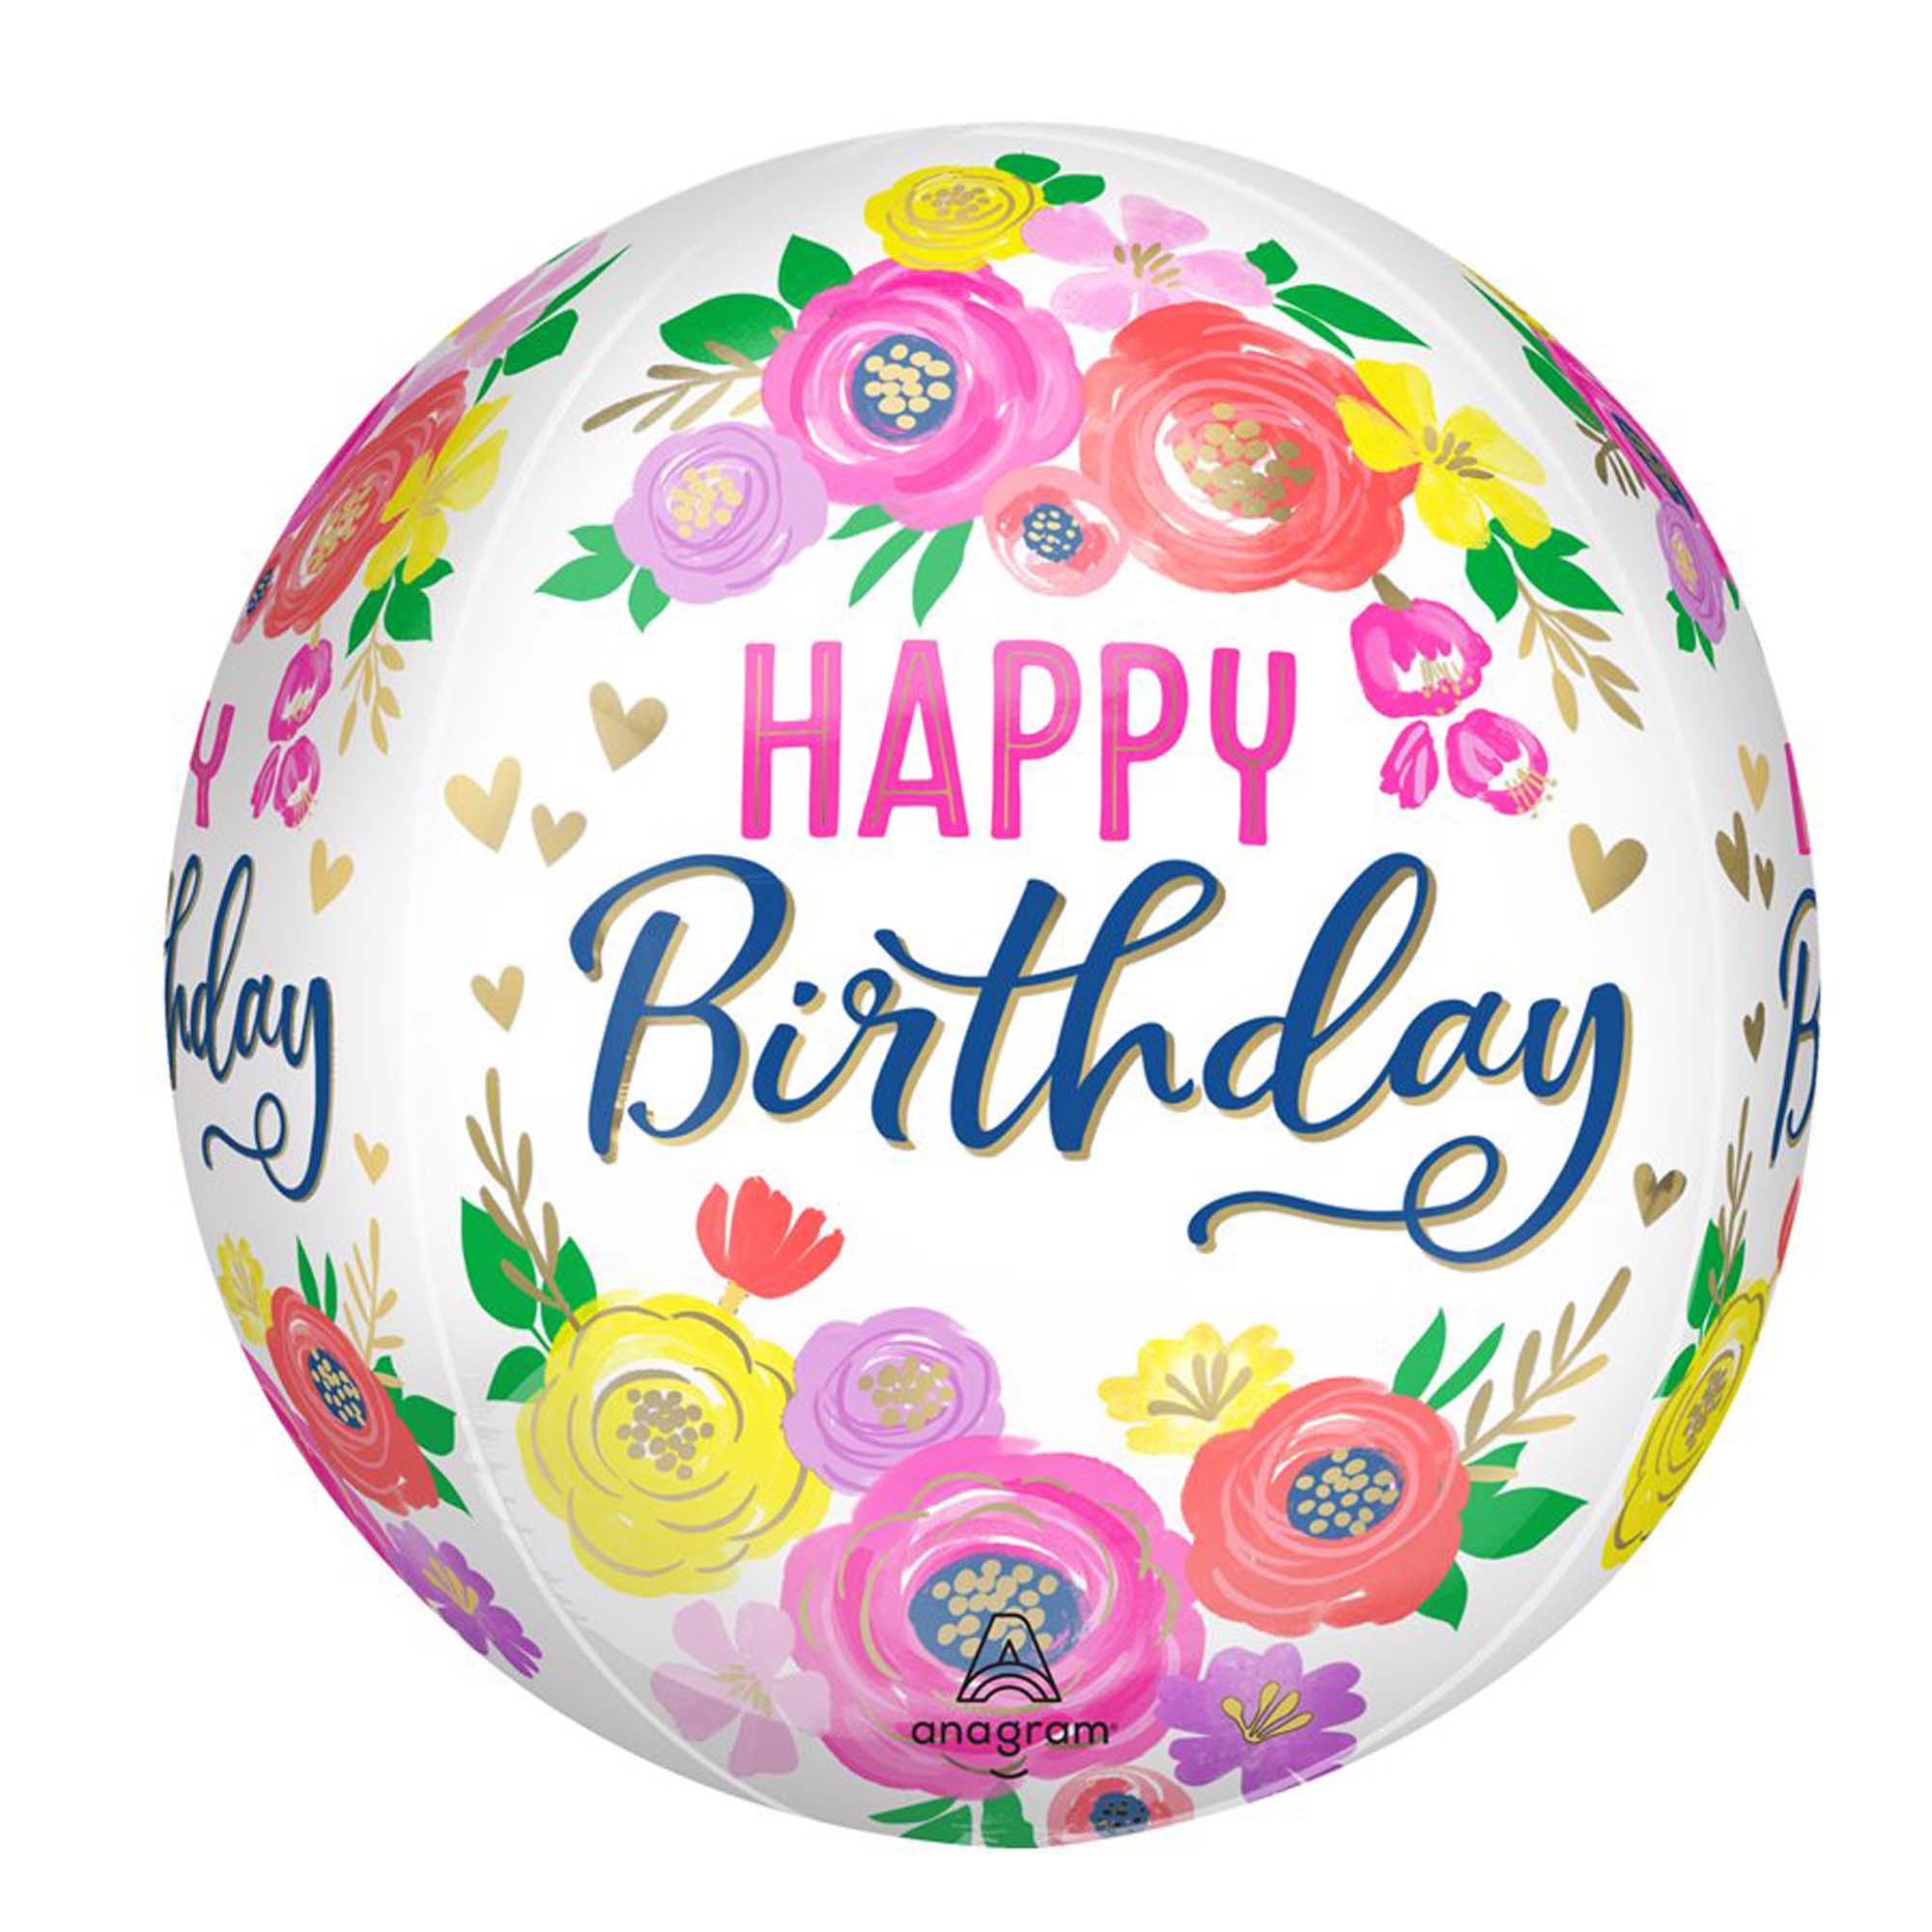 Happy Birthday Artful Floral Birthday Orbz Balloon, 15 Inches, 1 Count